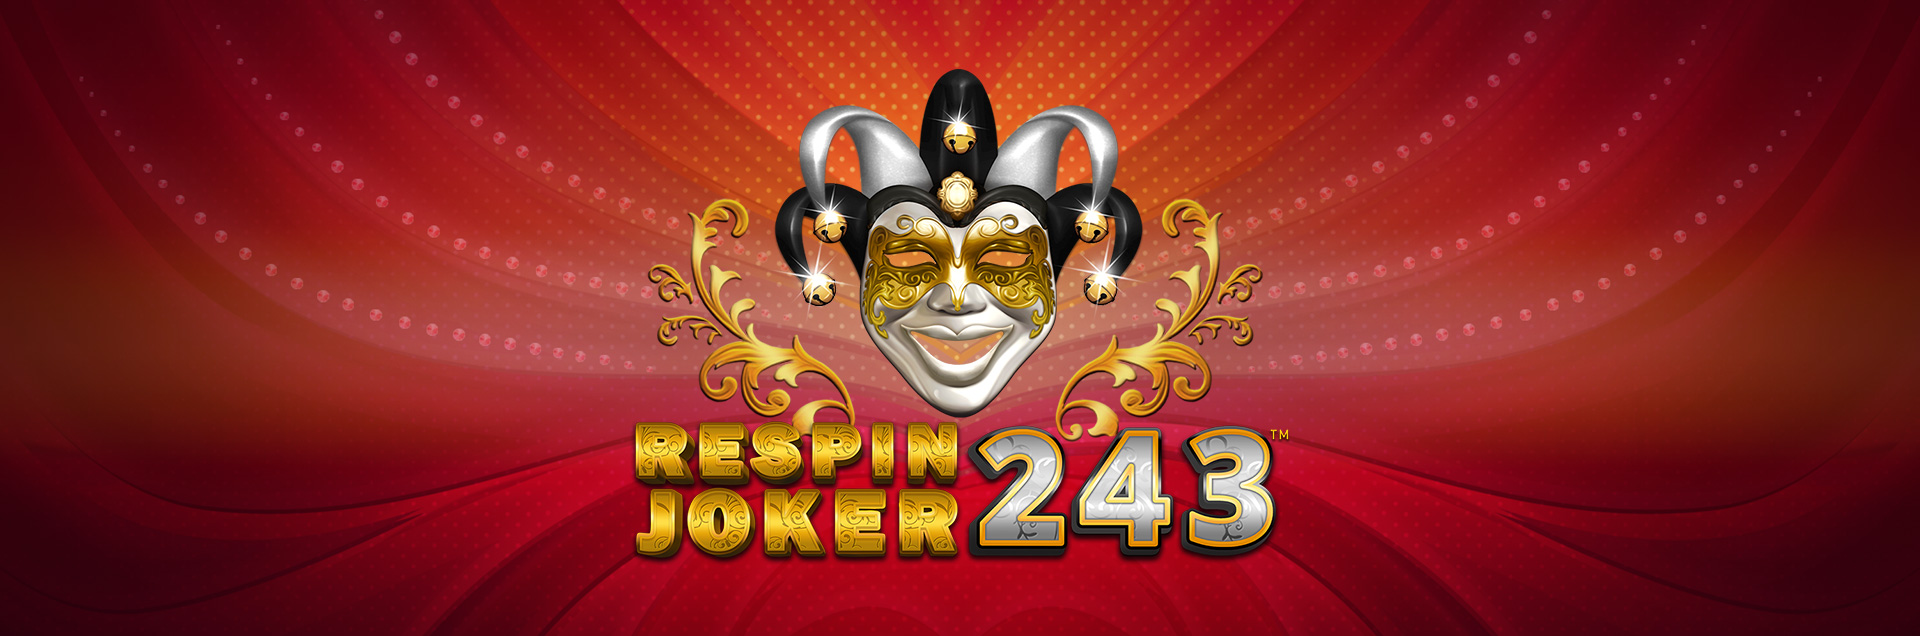 Respin Joker 243 header games